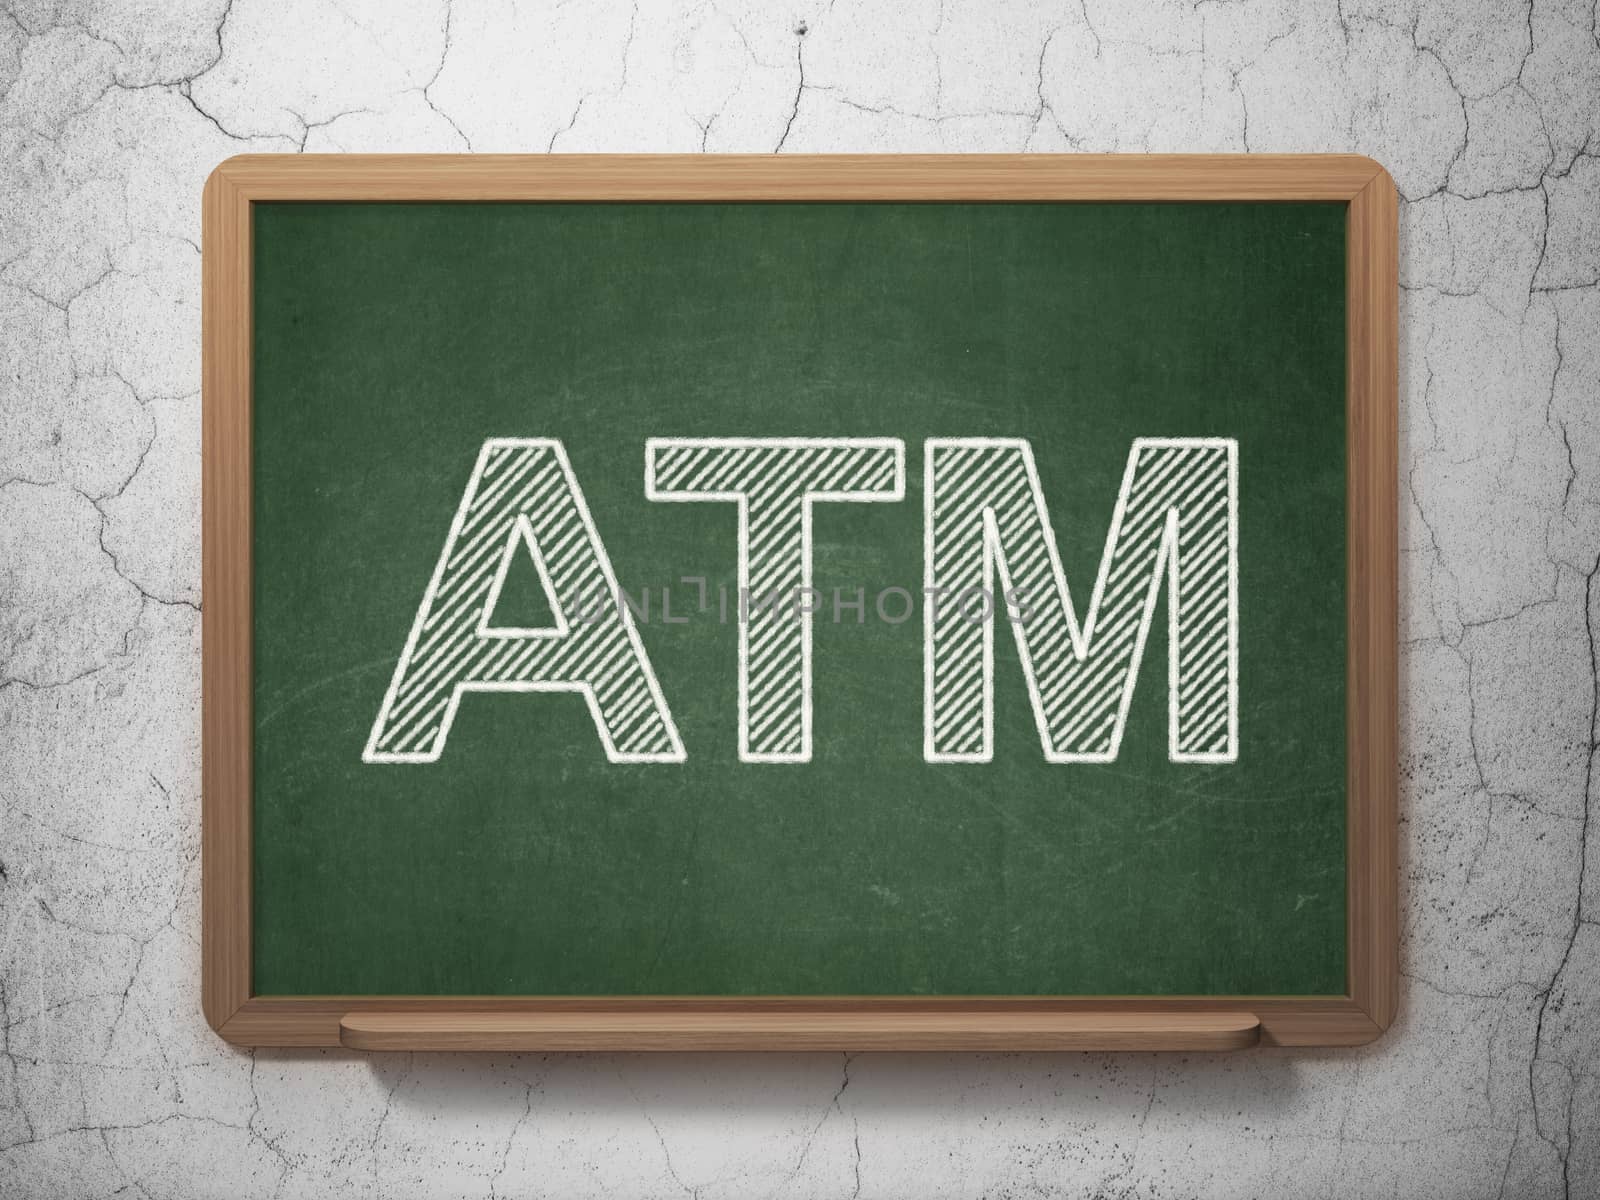 Banking concept: ATM on chalkboard background by maxkabakov